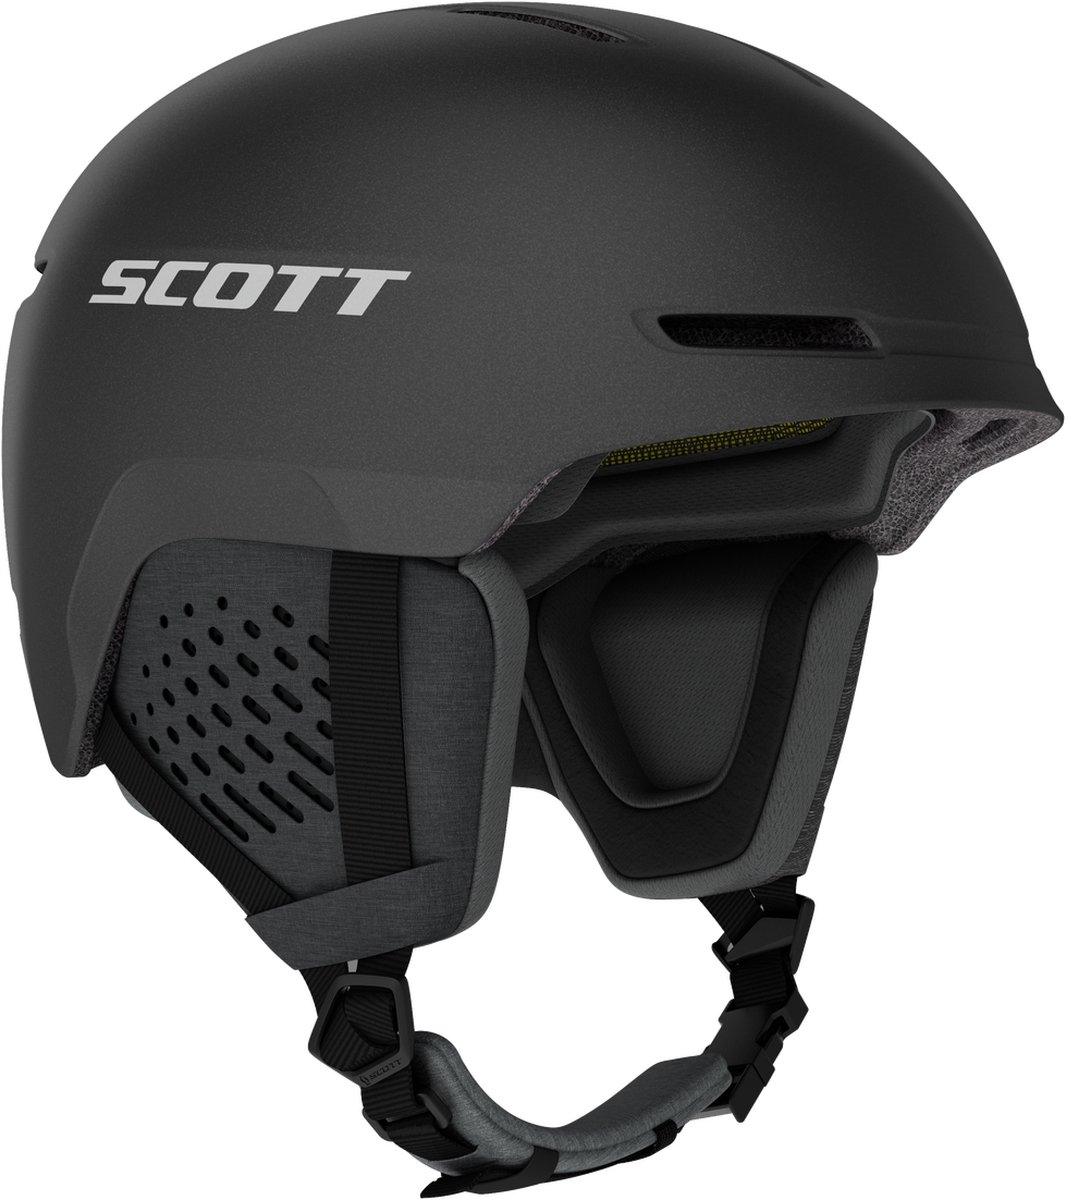 Scott Track skihelm - zwart - maat S (51-55 cm)